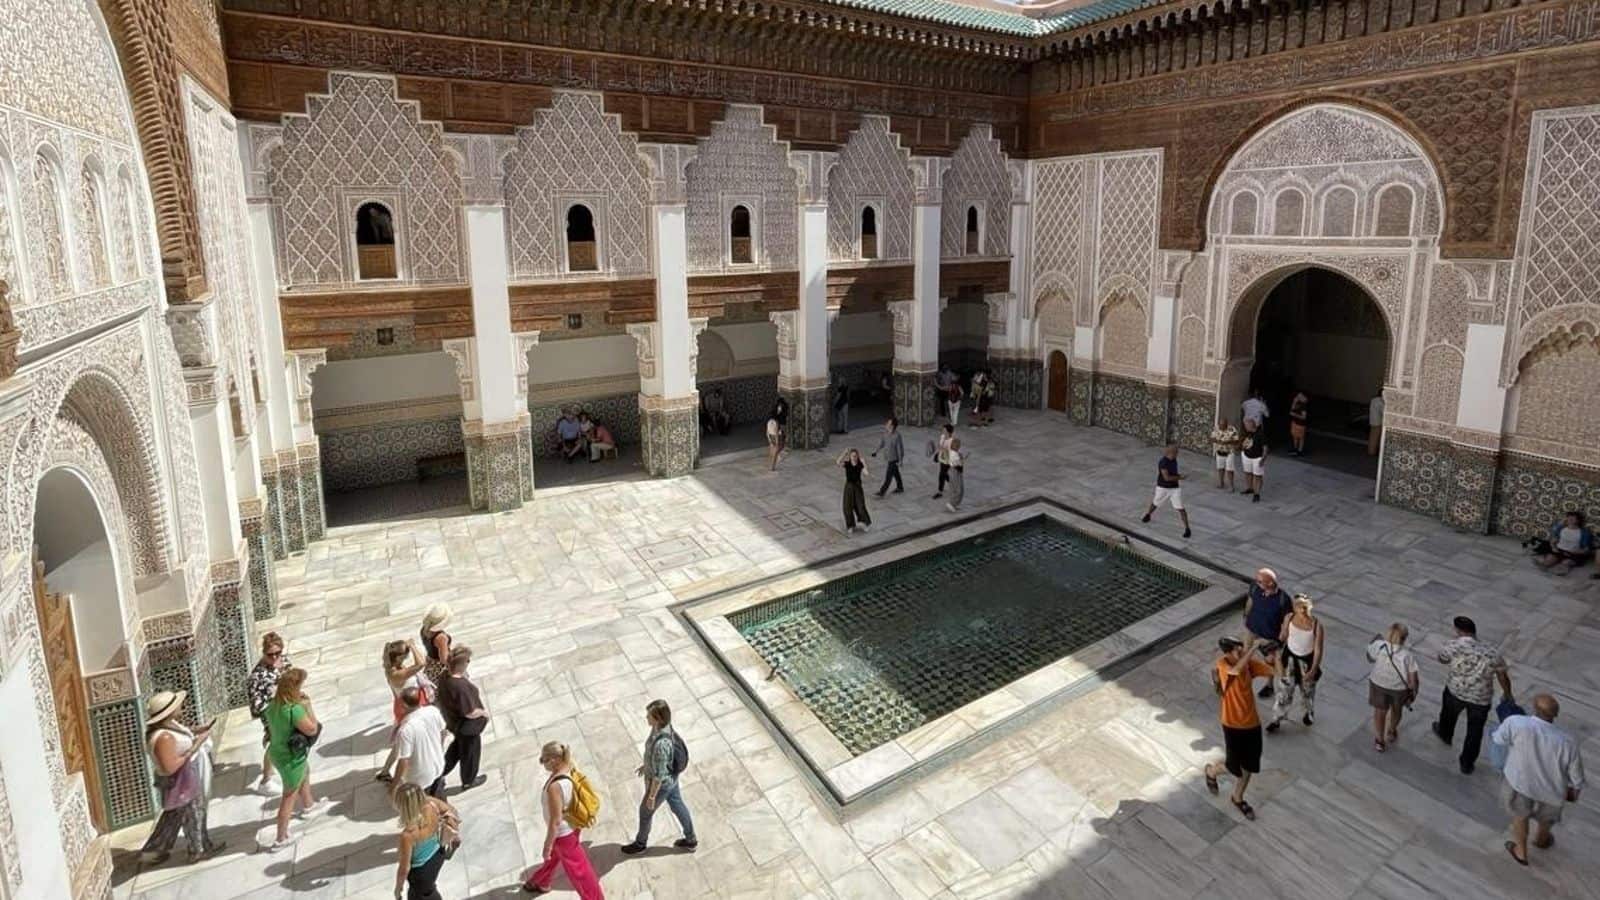 Take a tour of Marrakech's architectural wonders